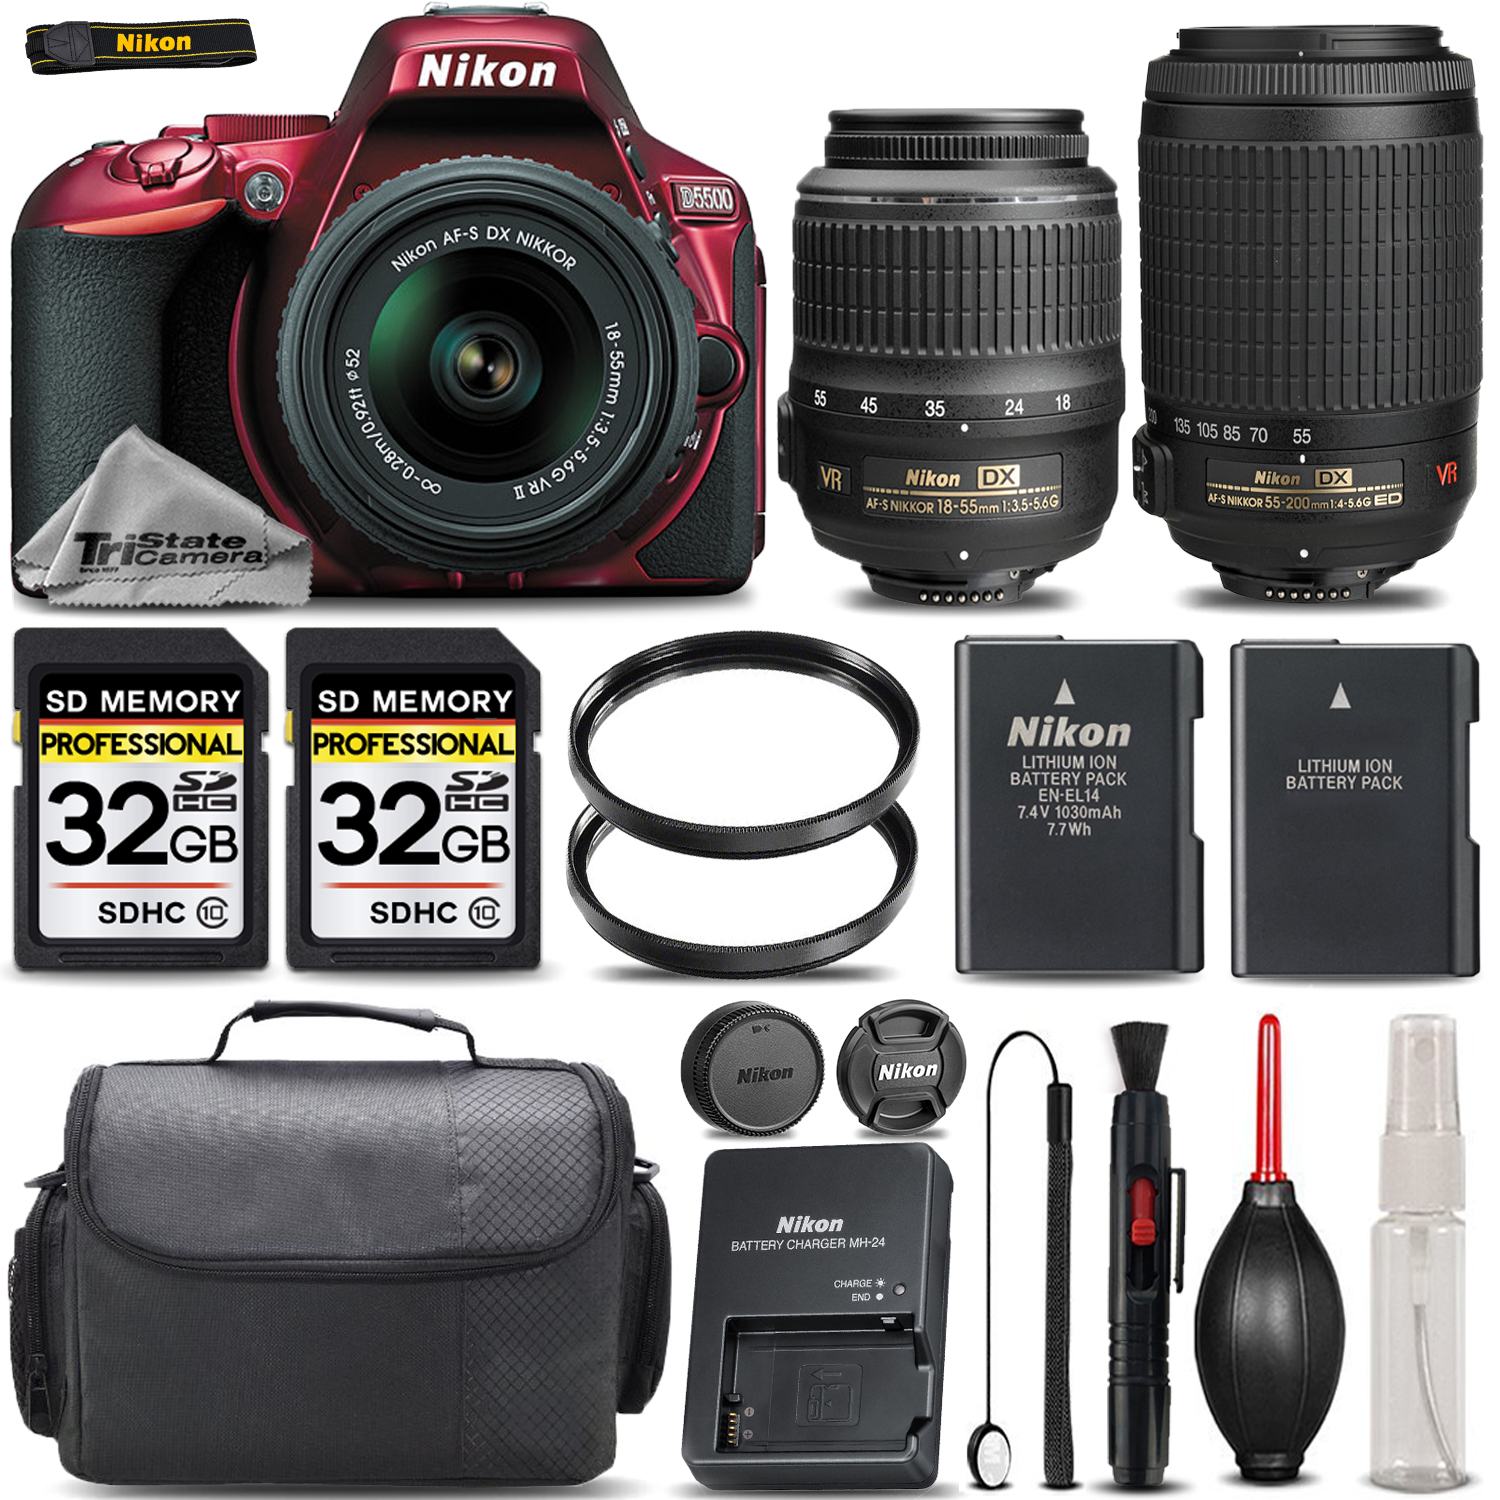 D5500 (RED) Digital SLR Camera with 18-55mm VR II + 55-200mm VR II Bundle *FREE SHIPPING*